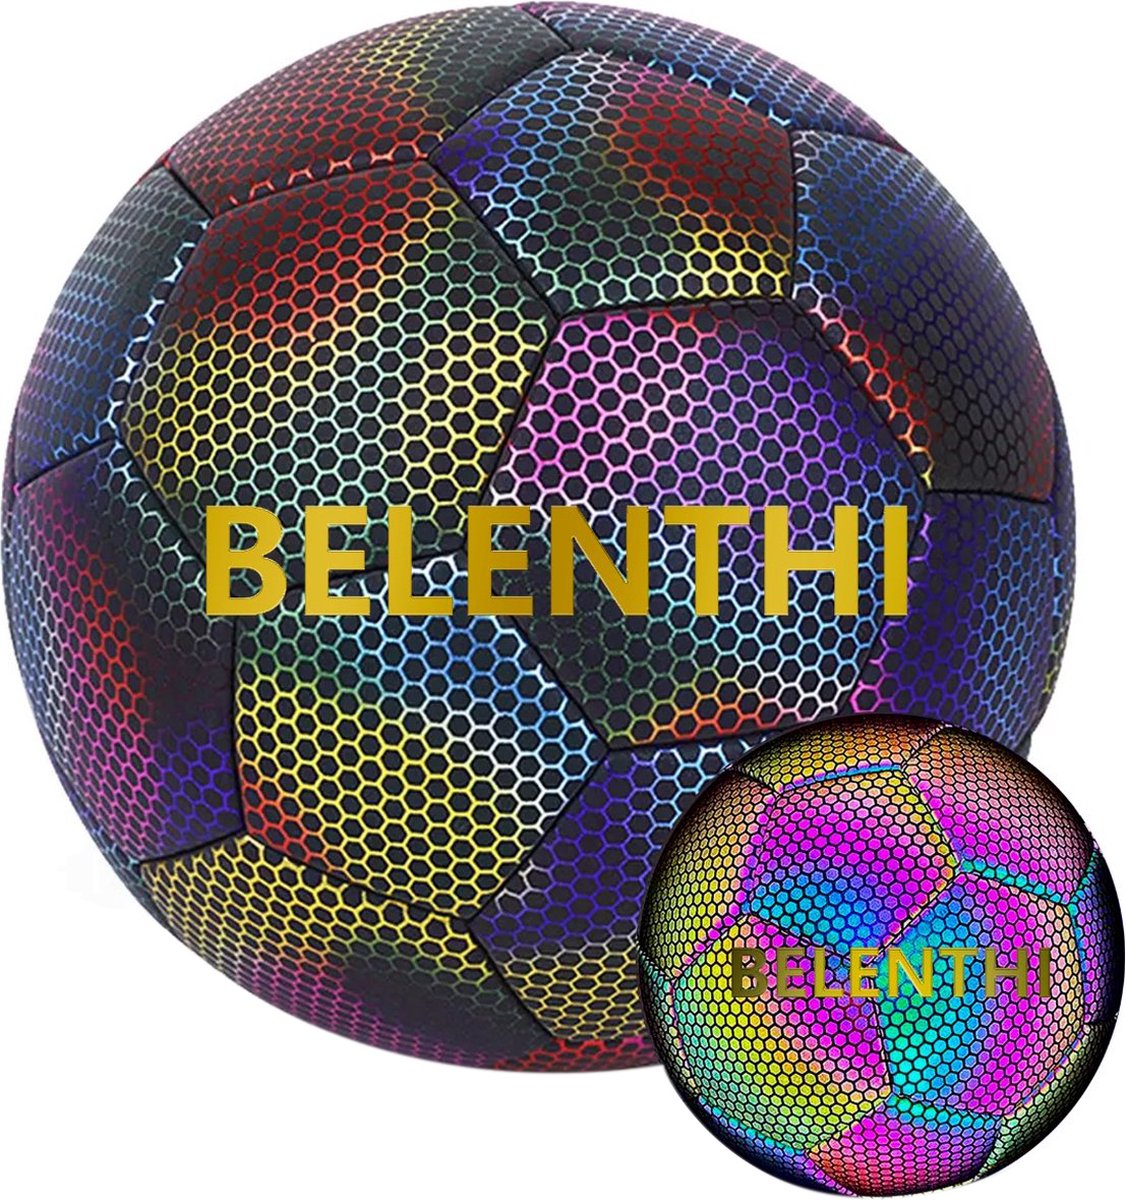 Belenthi Lichtgevende Voetbal - Glow in the Dark Bal - Lichtgevende Bal - Bright colors - Holografisch - Reflecterend